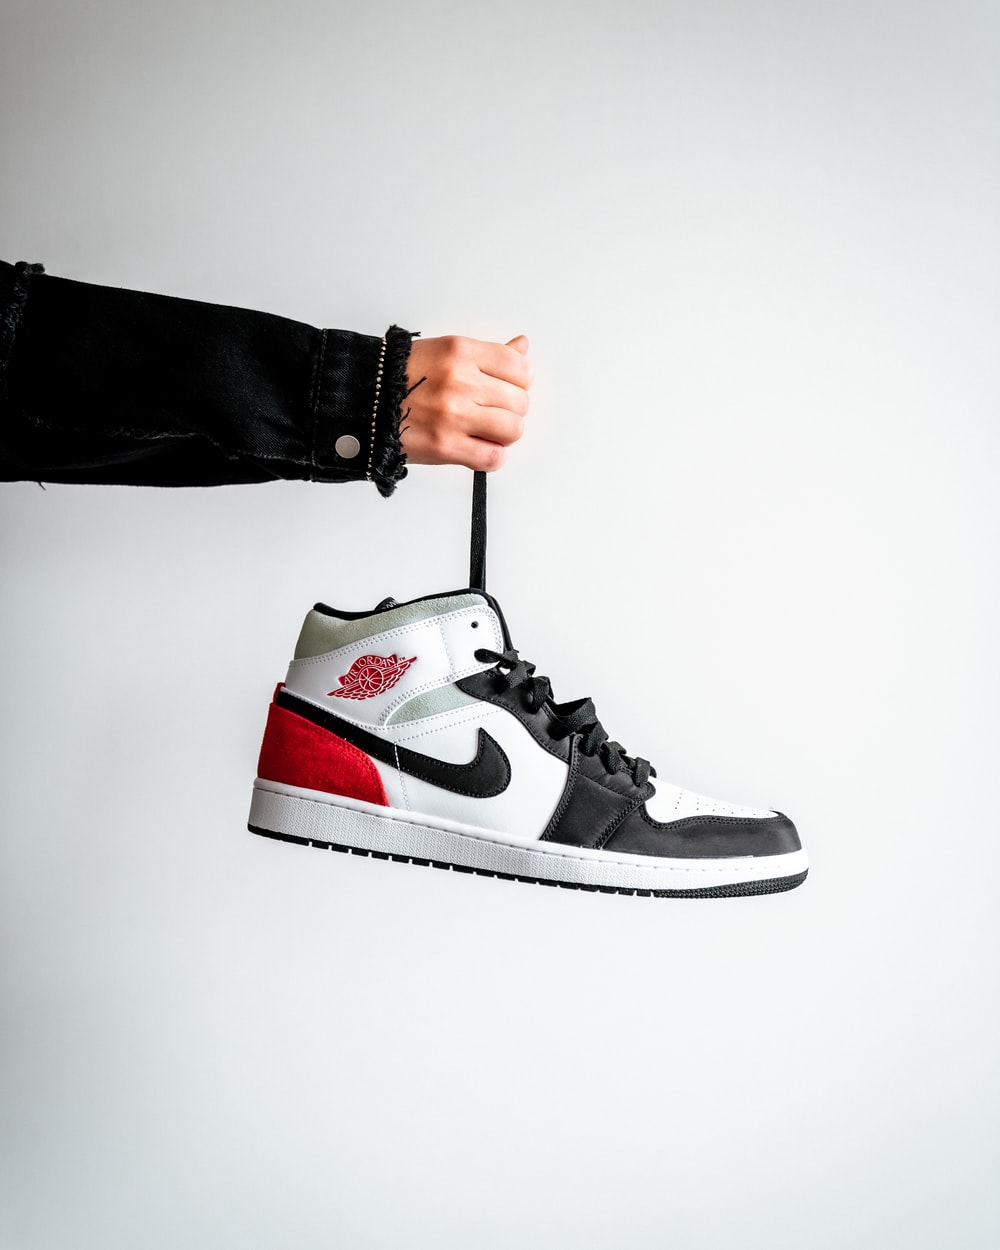 Nike Jordan Picture [HD]. Download Free Image